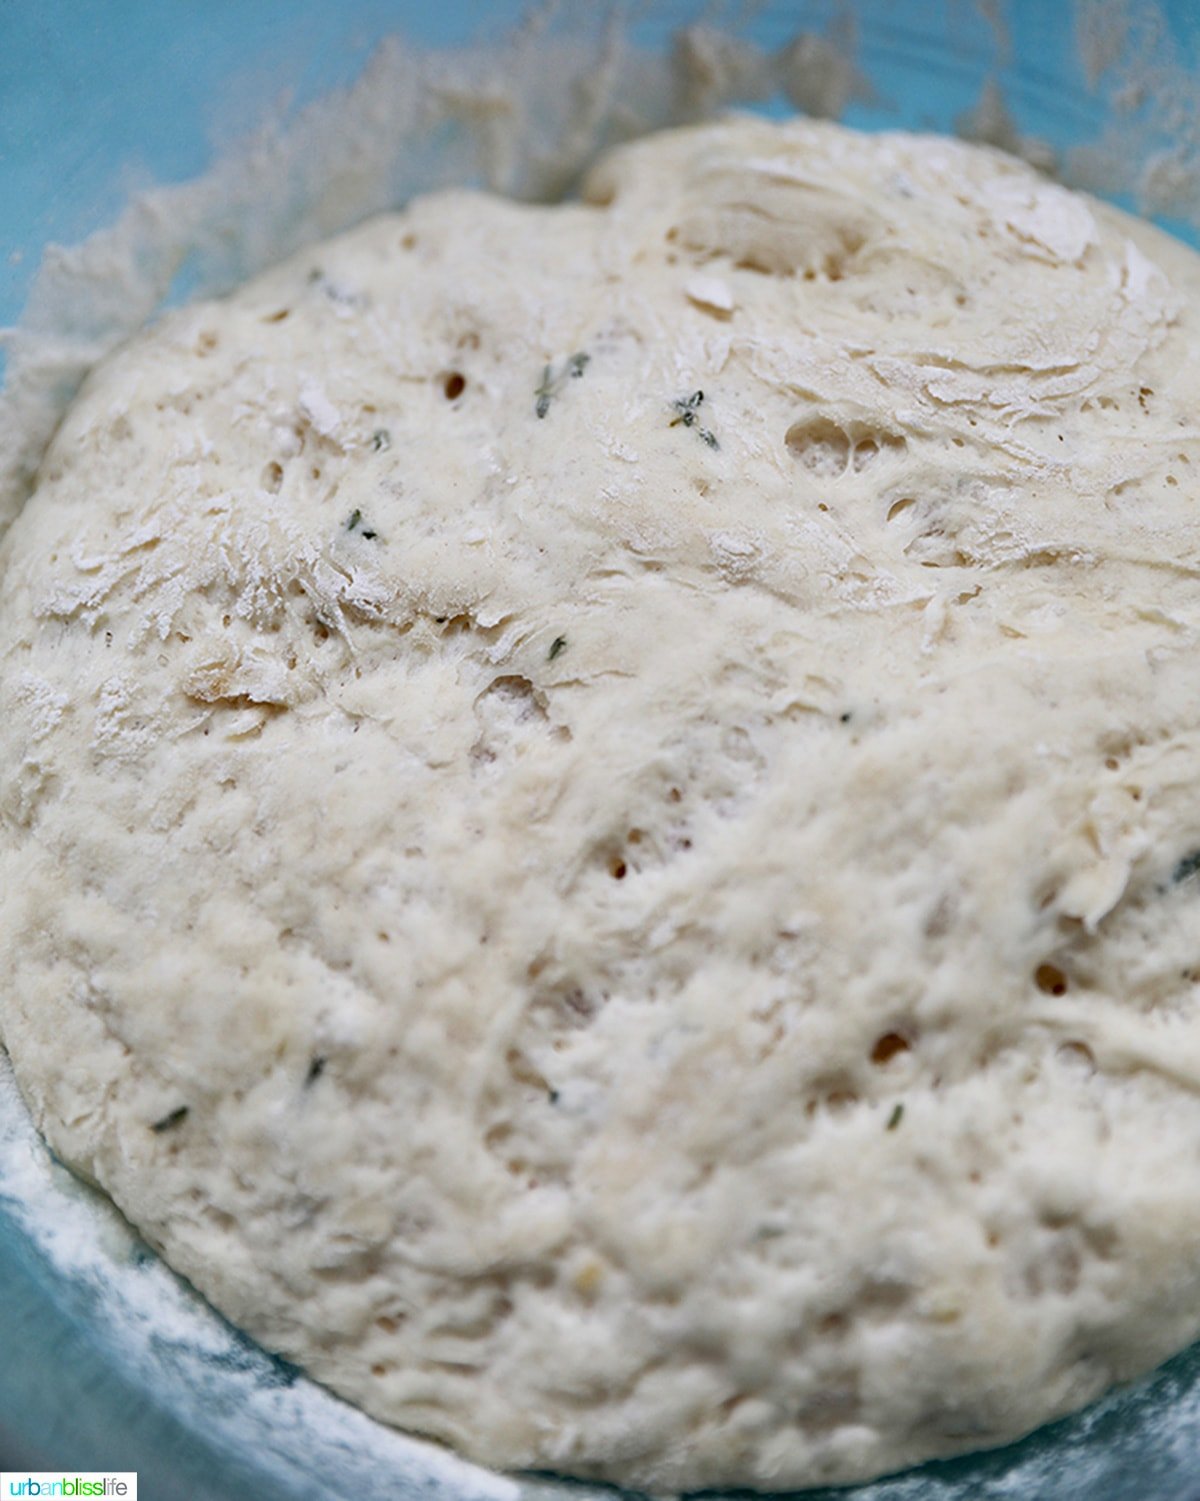 focaccia dough rising